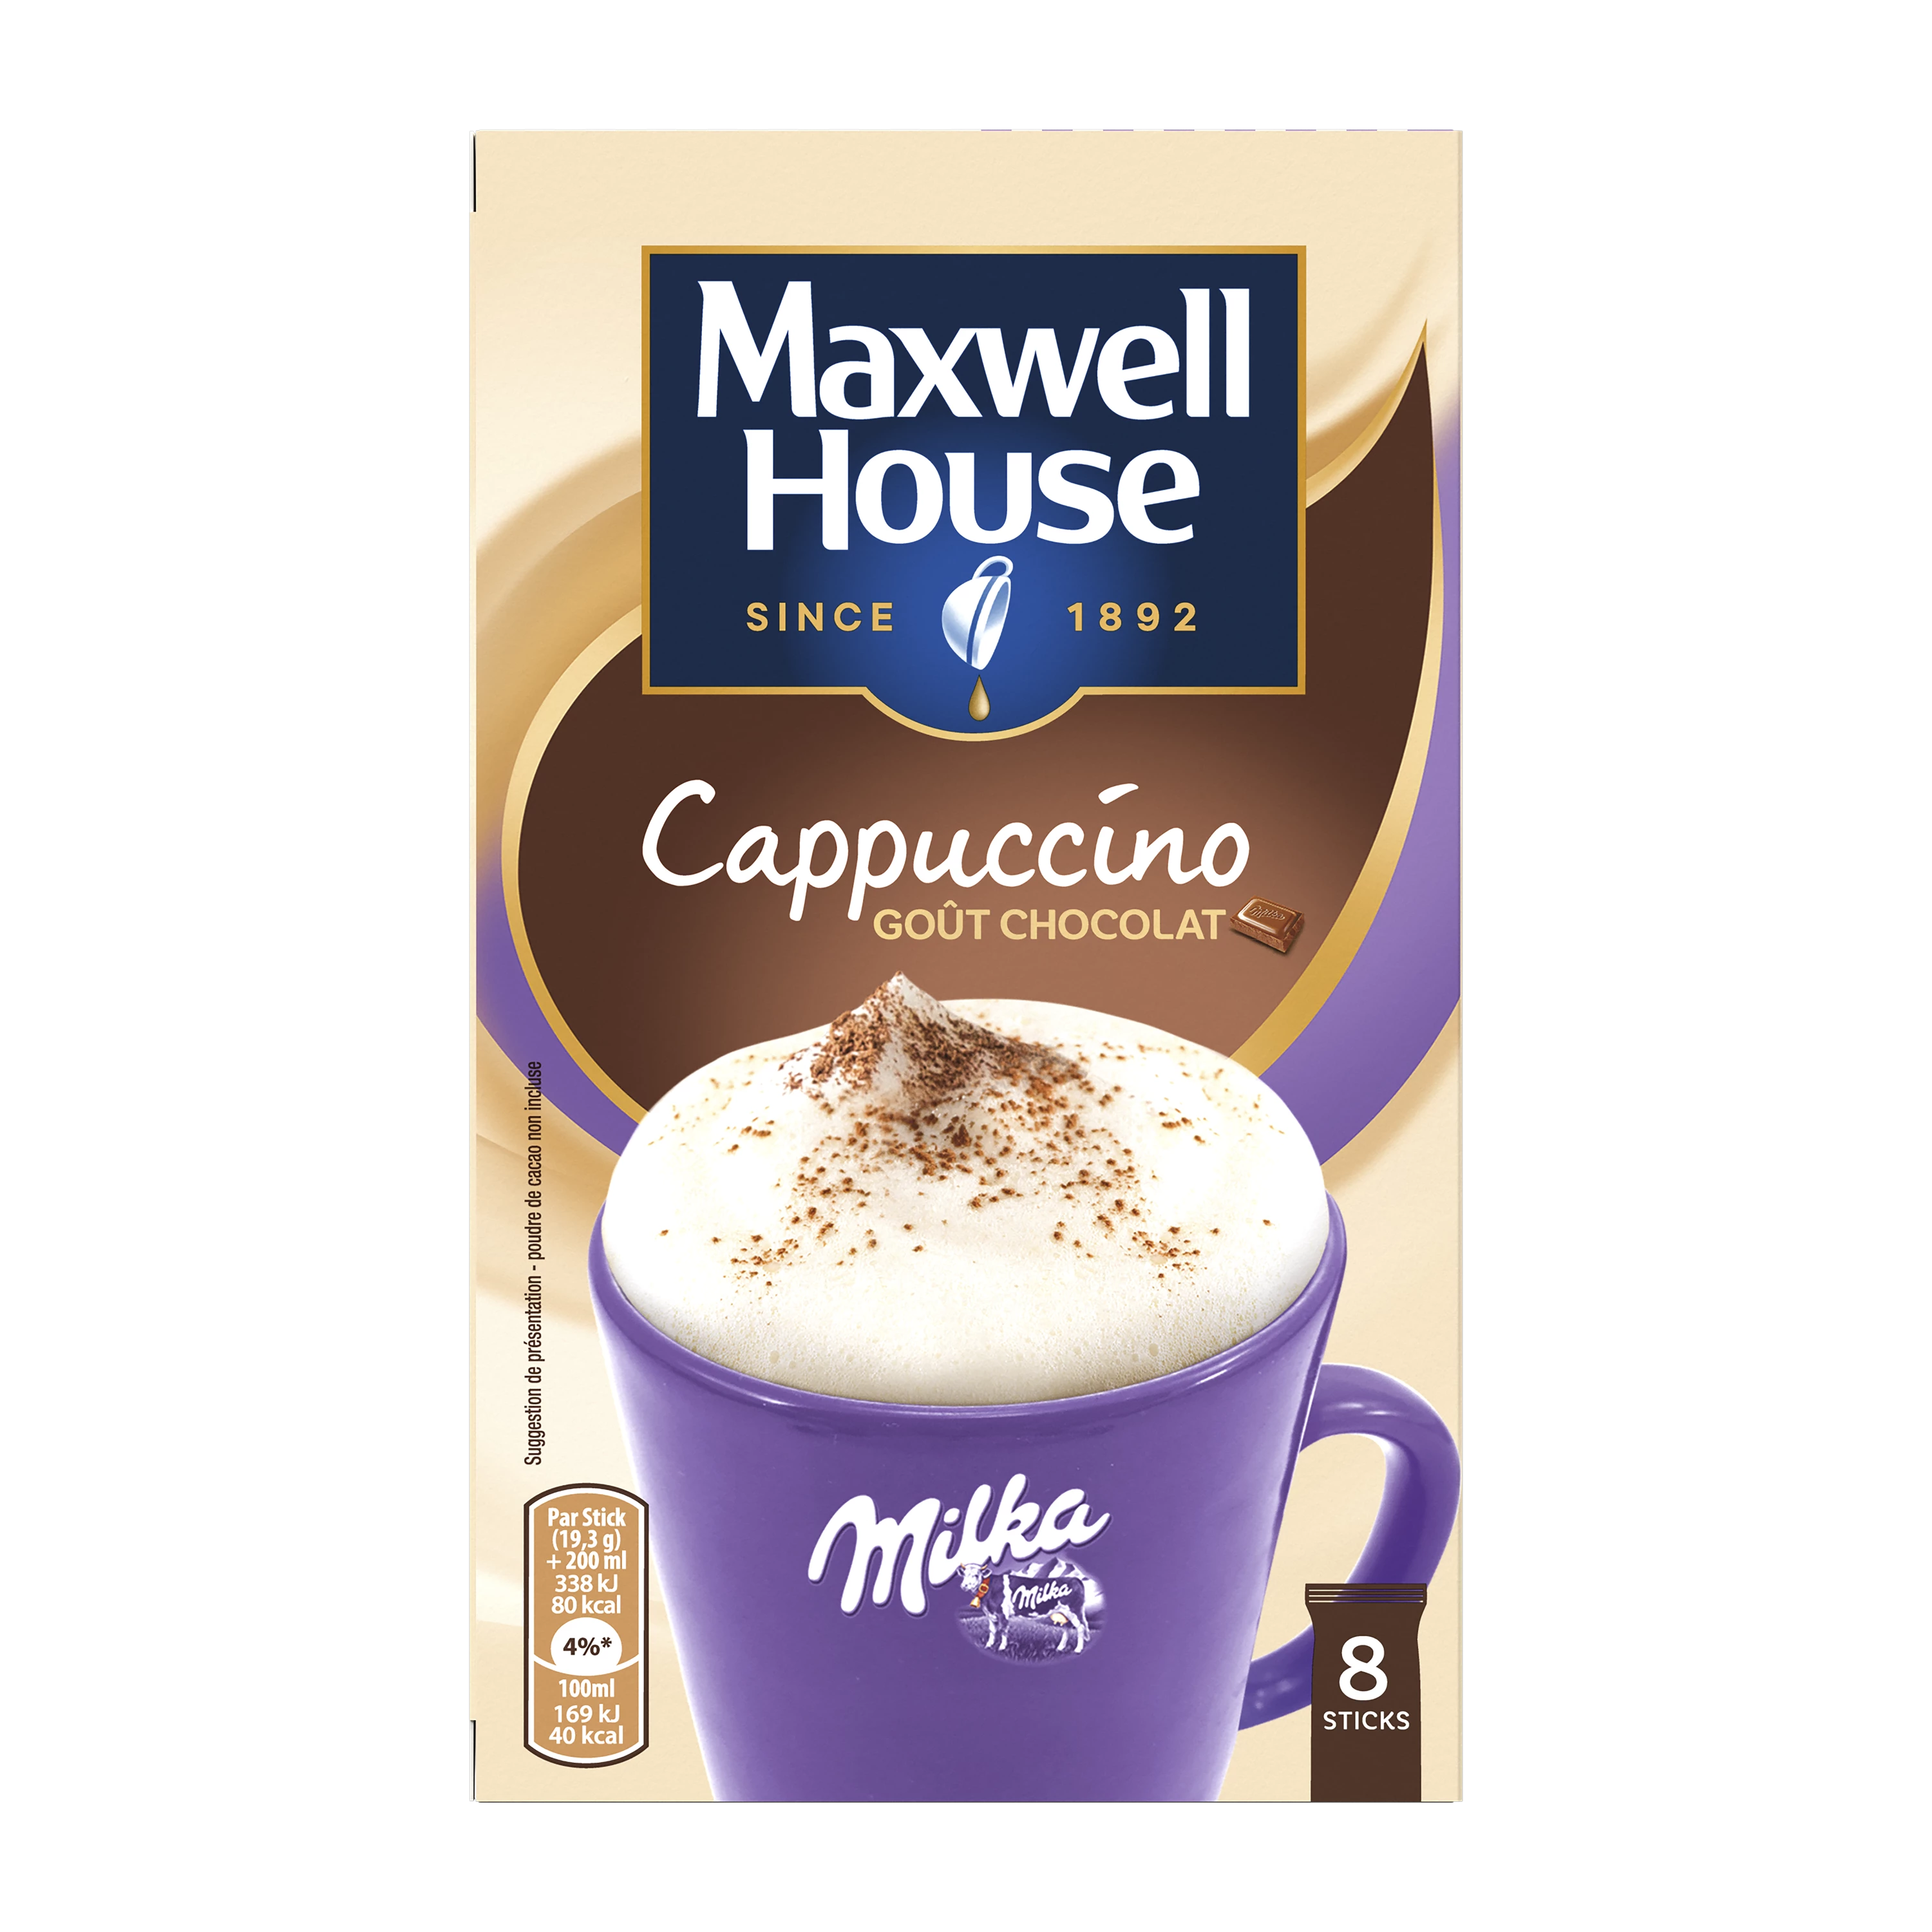 Cappuccino Goût Chocolat Milka X8 Sticks 154g - MAXWELL HOUSE